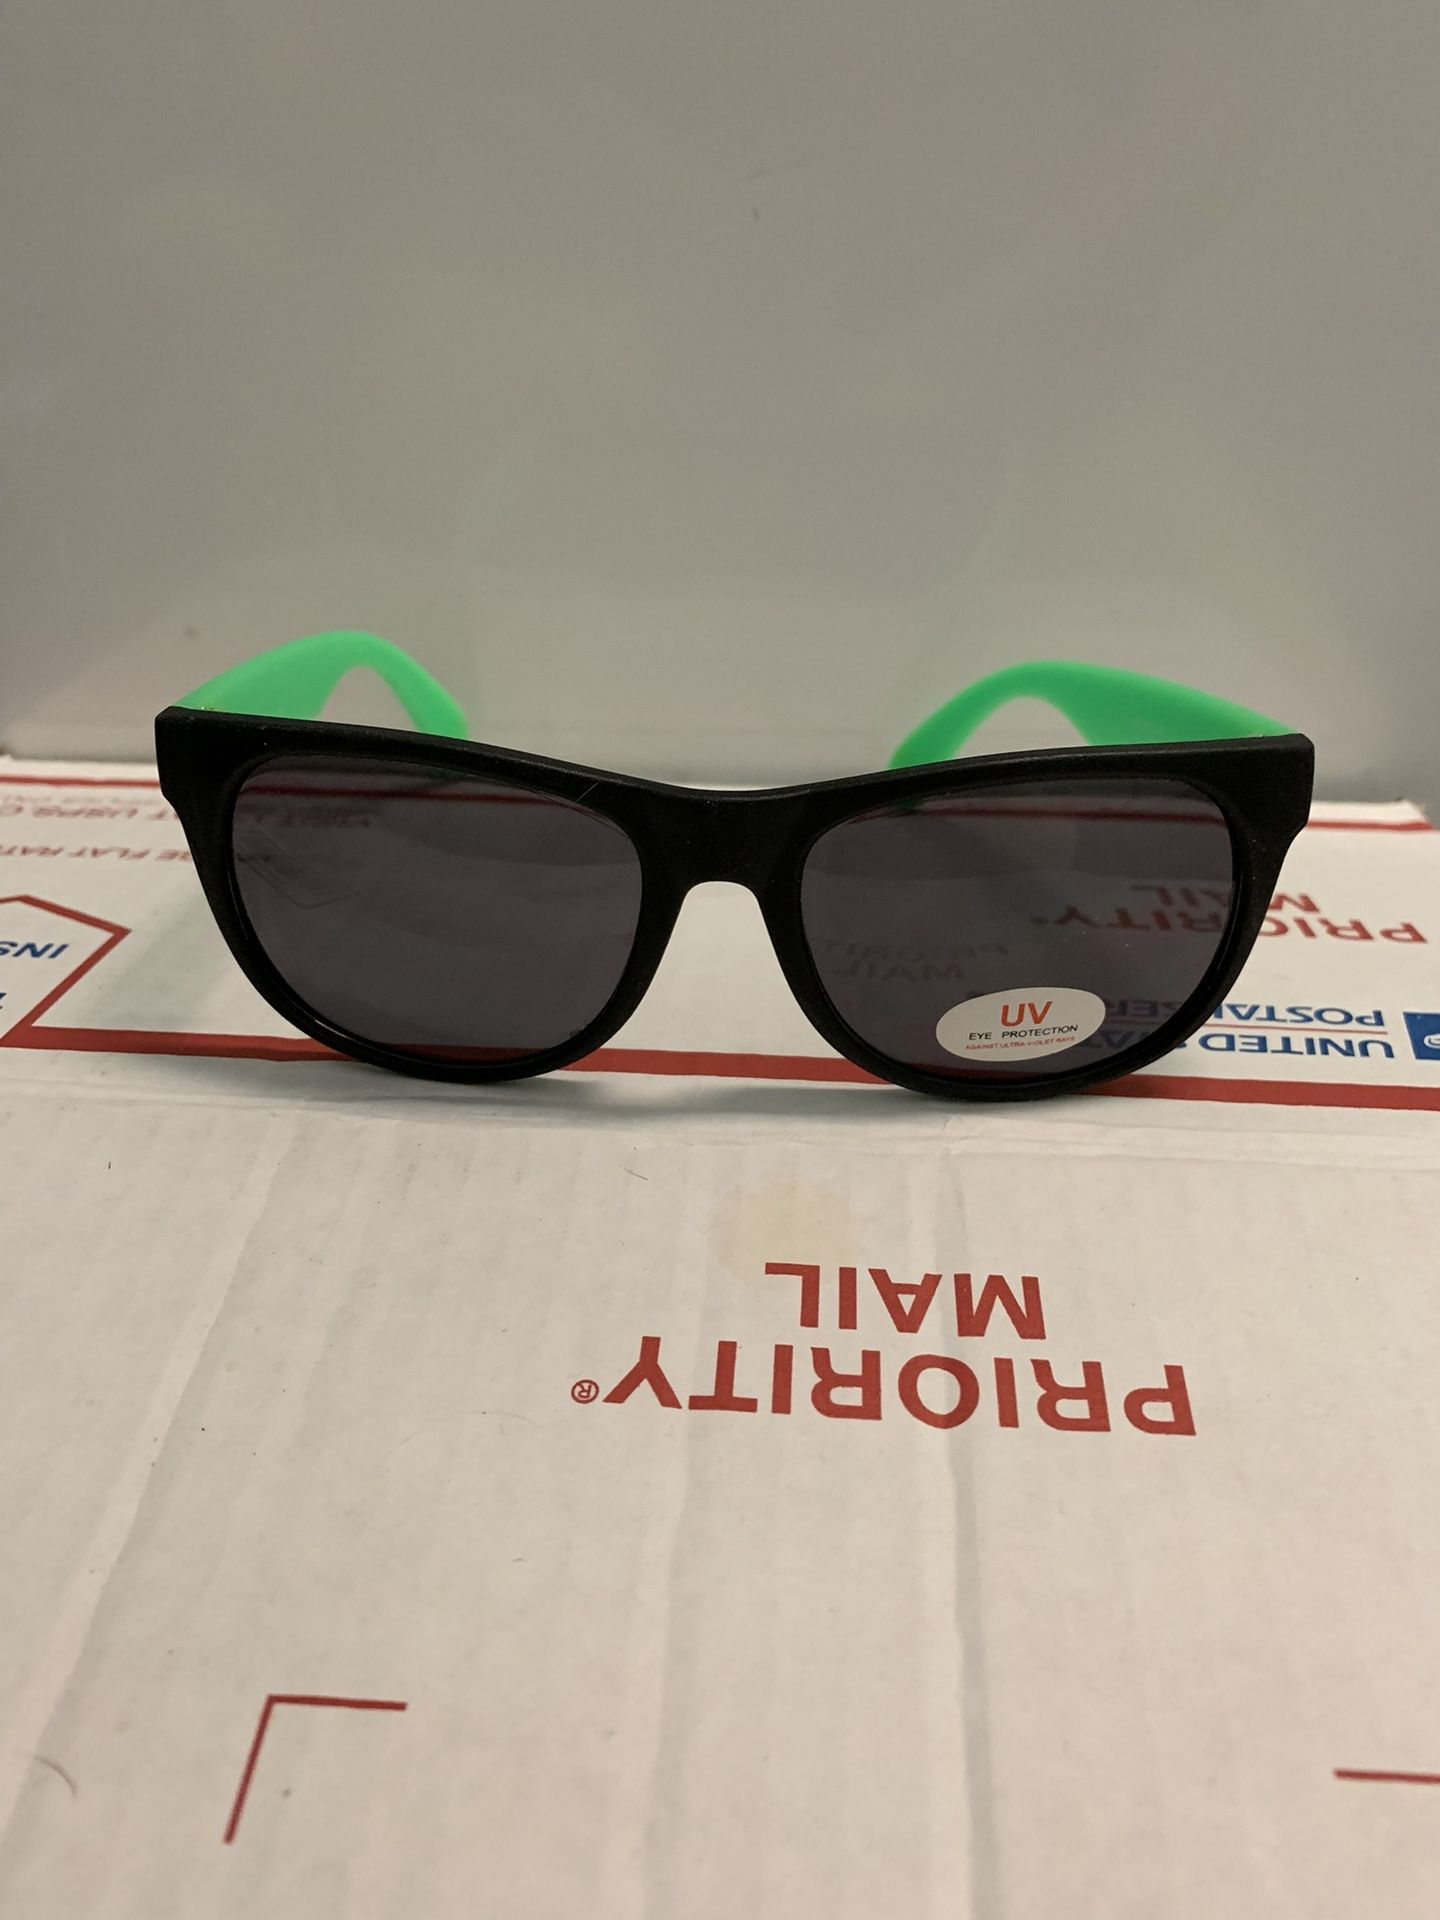 Microsoft - XBOX - Sunglasses - (New)